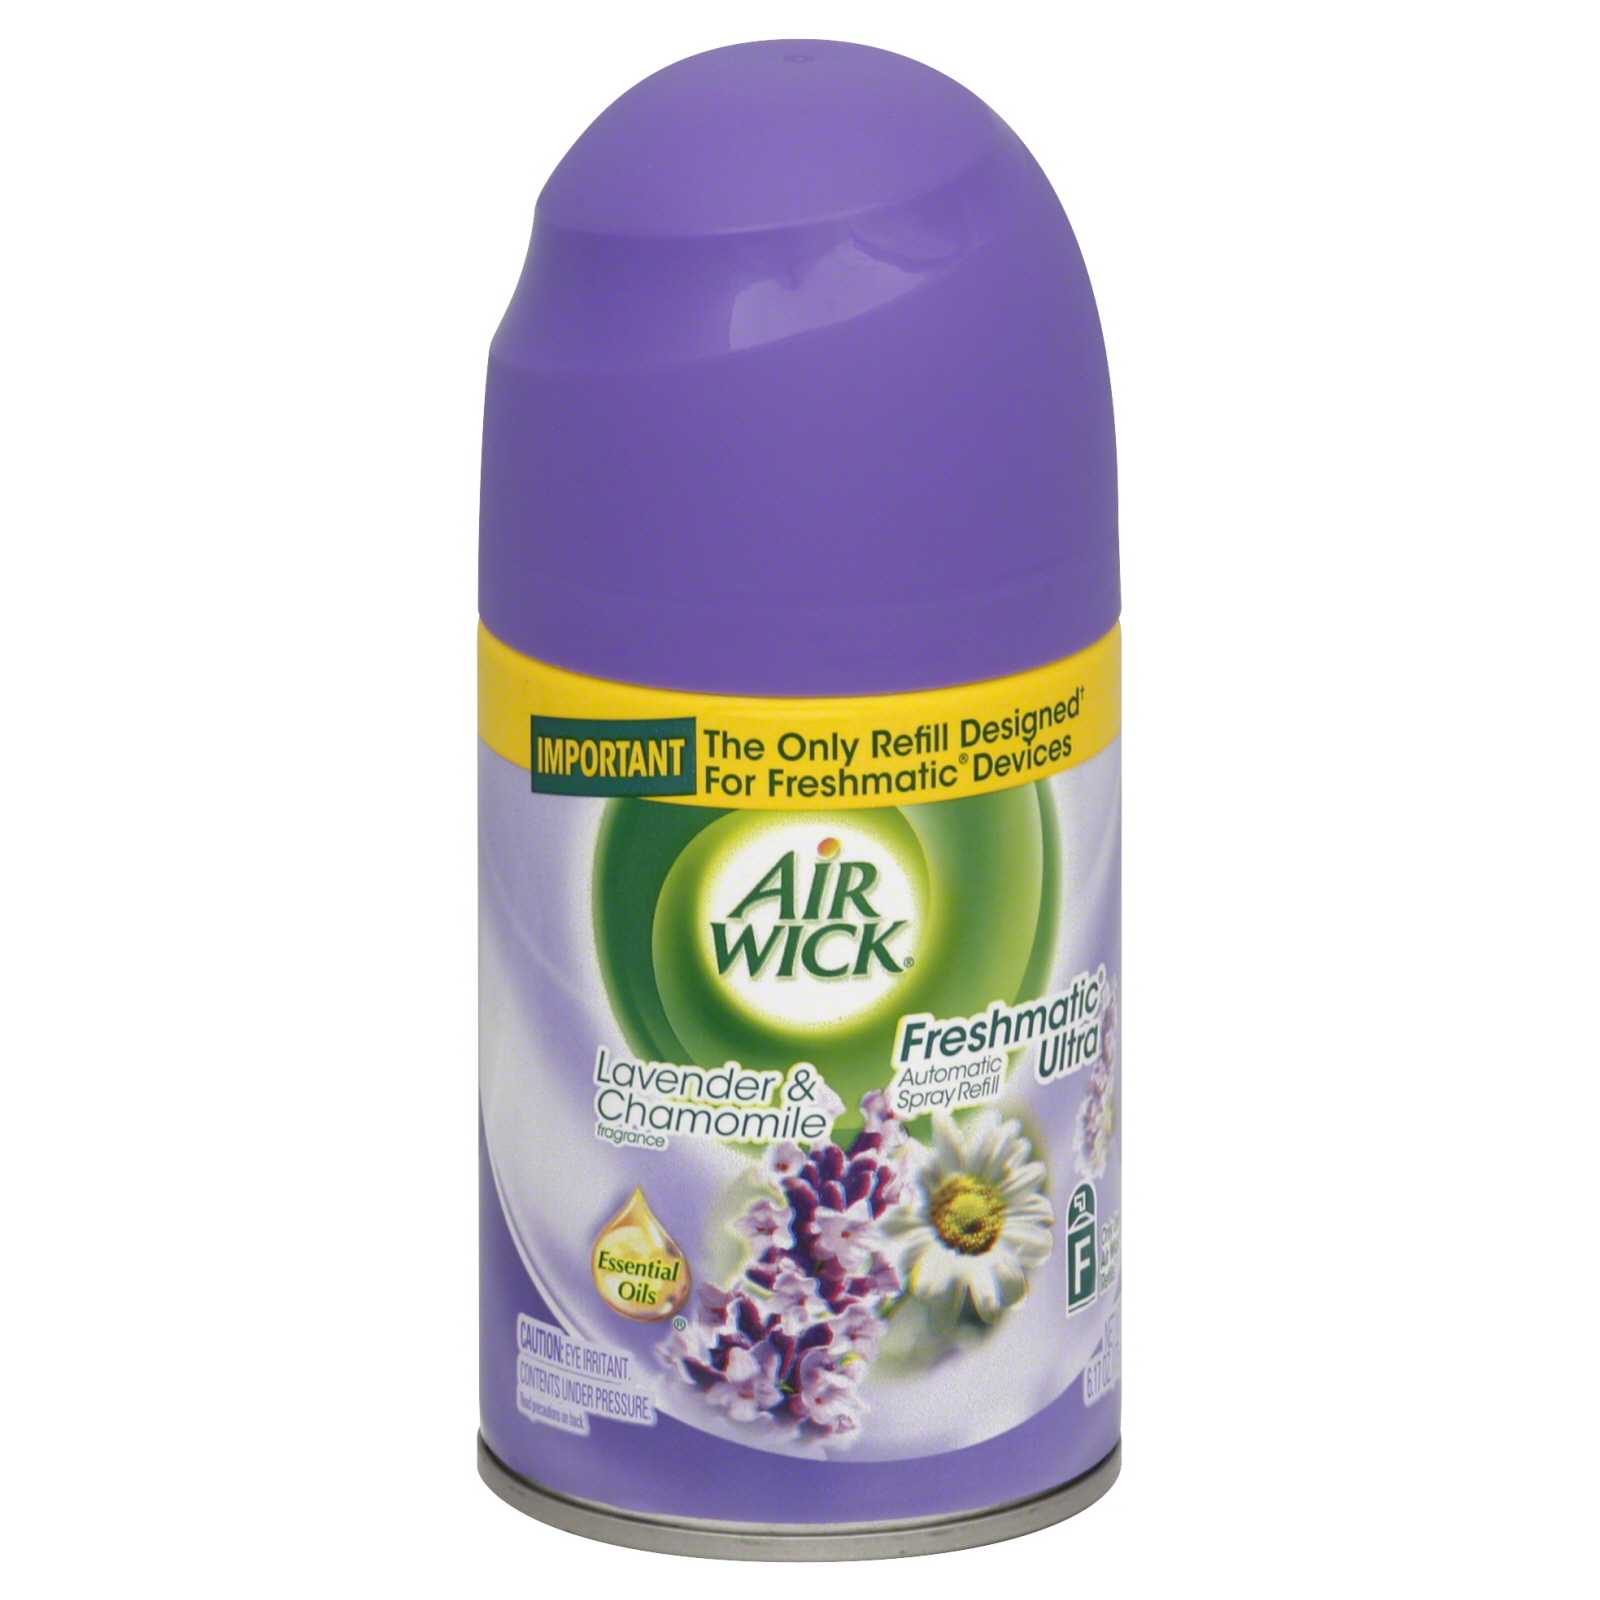 Airwick FreshMatic Ultra Automatic Spray Refill, Relaxation, Lavender & Chamomile, 6.17 oz (175 g)